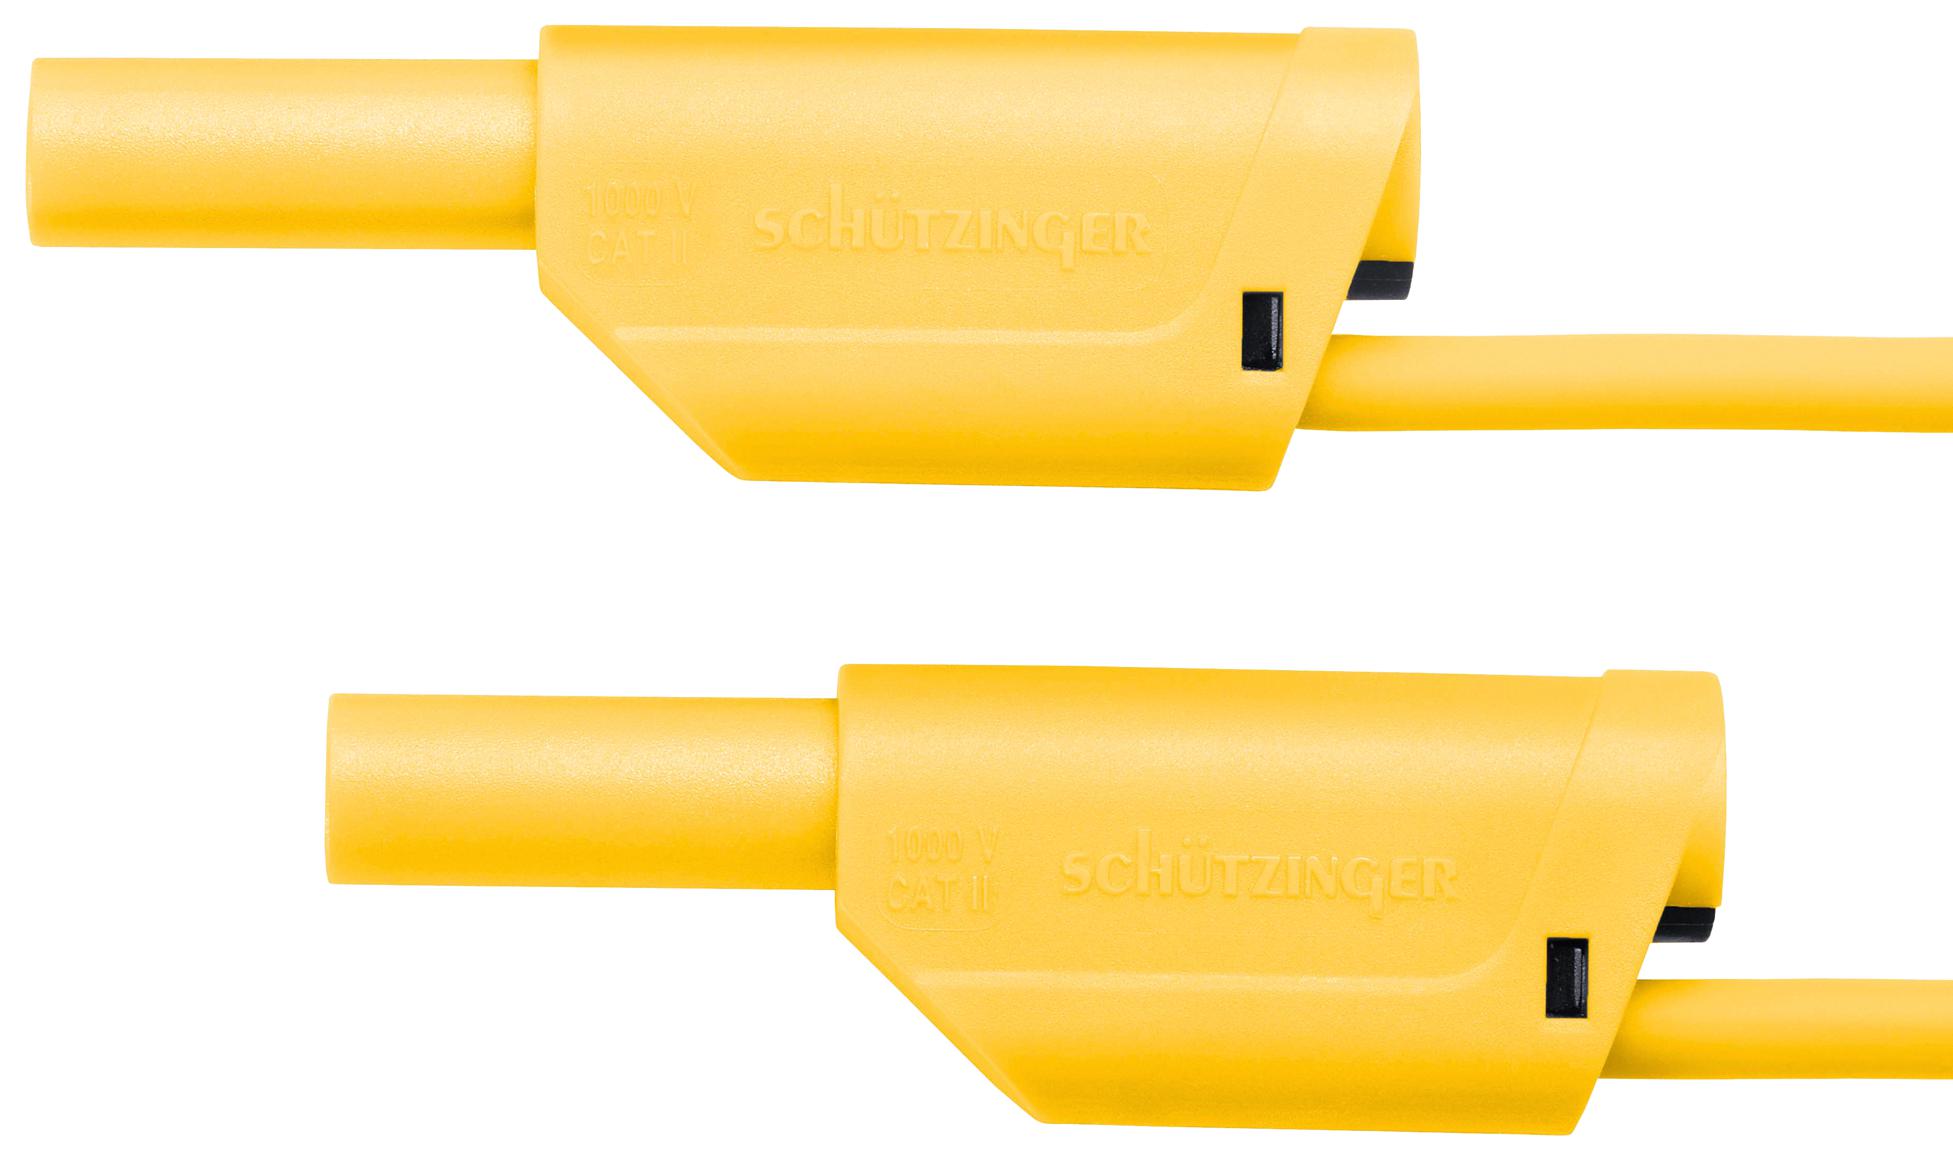 Schutzinger Vsfk 6000 / 2.5 / 50 / Ge Test Lead, Stackable Banana Plug, 500mm